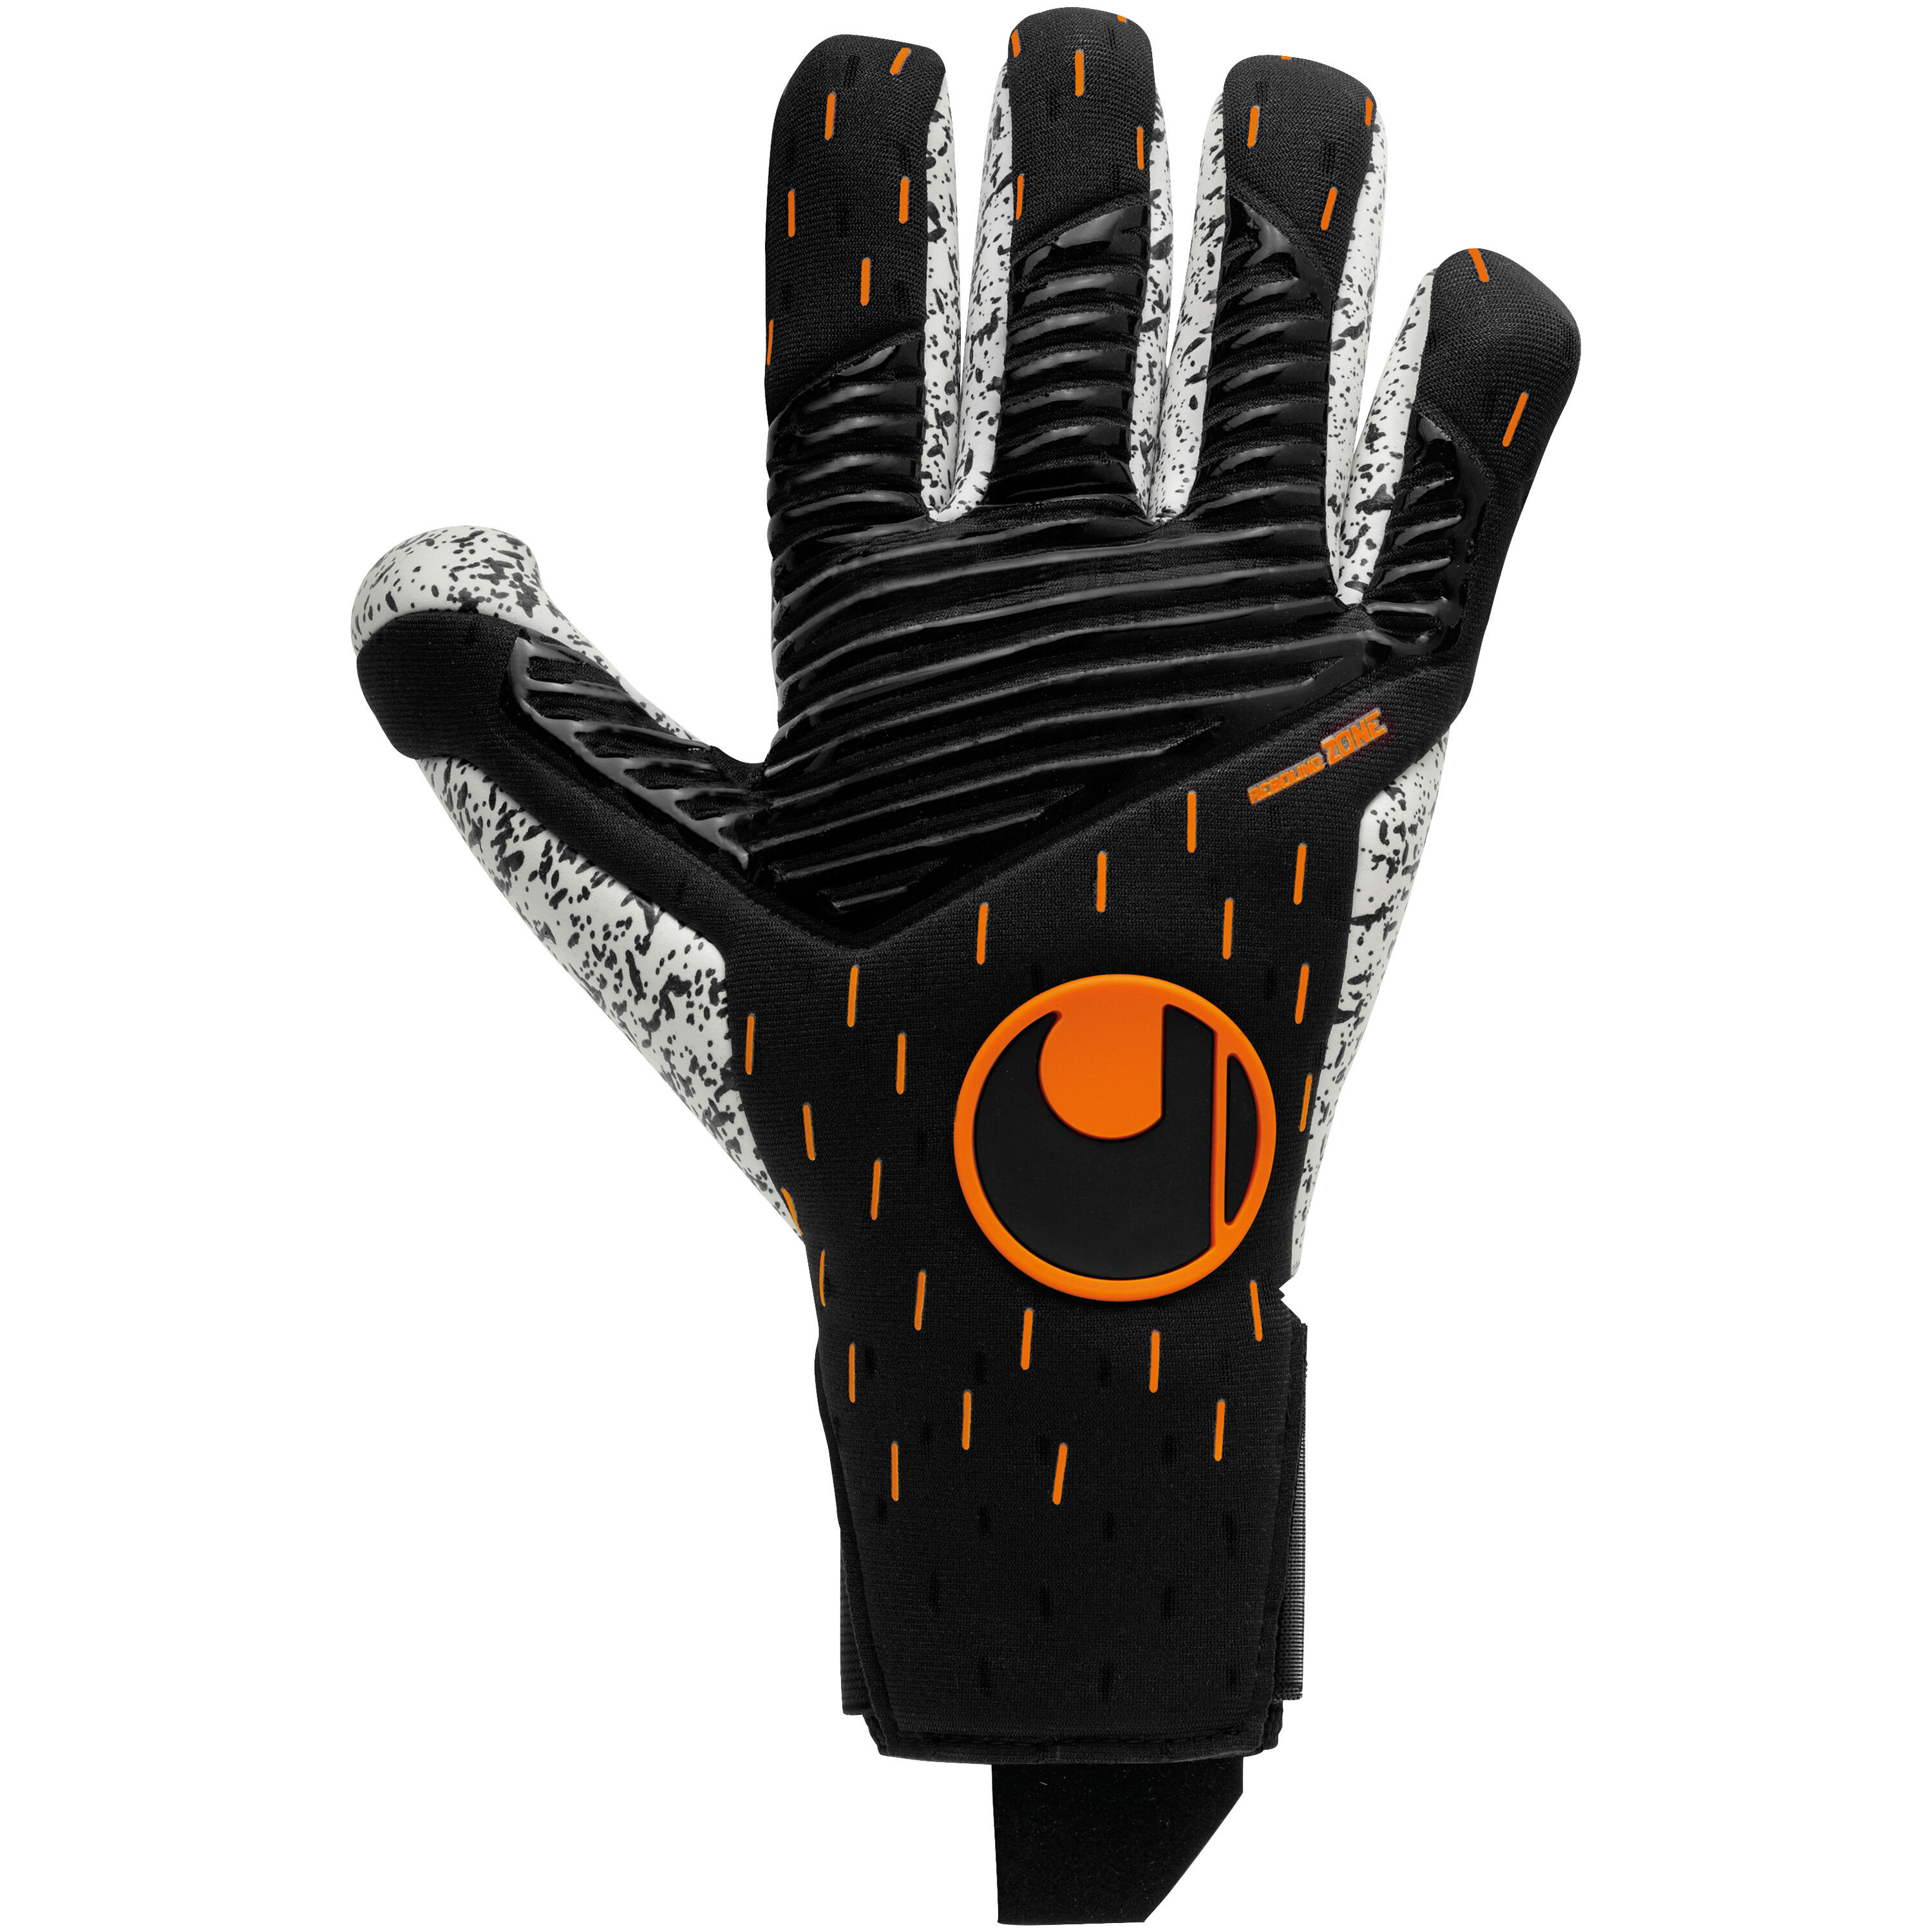 UHLSPORT Uhlsport Speed Contact Supergrip+ Finger Surround  Goalkeeper Gloves